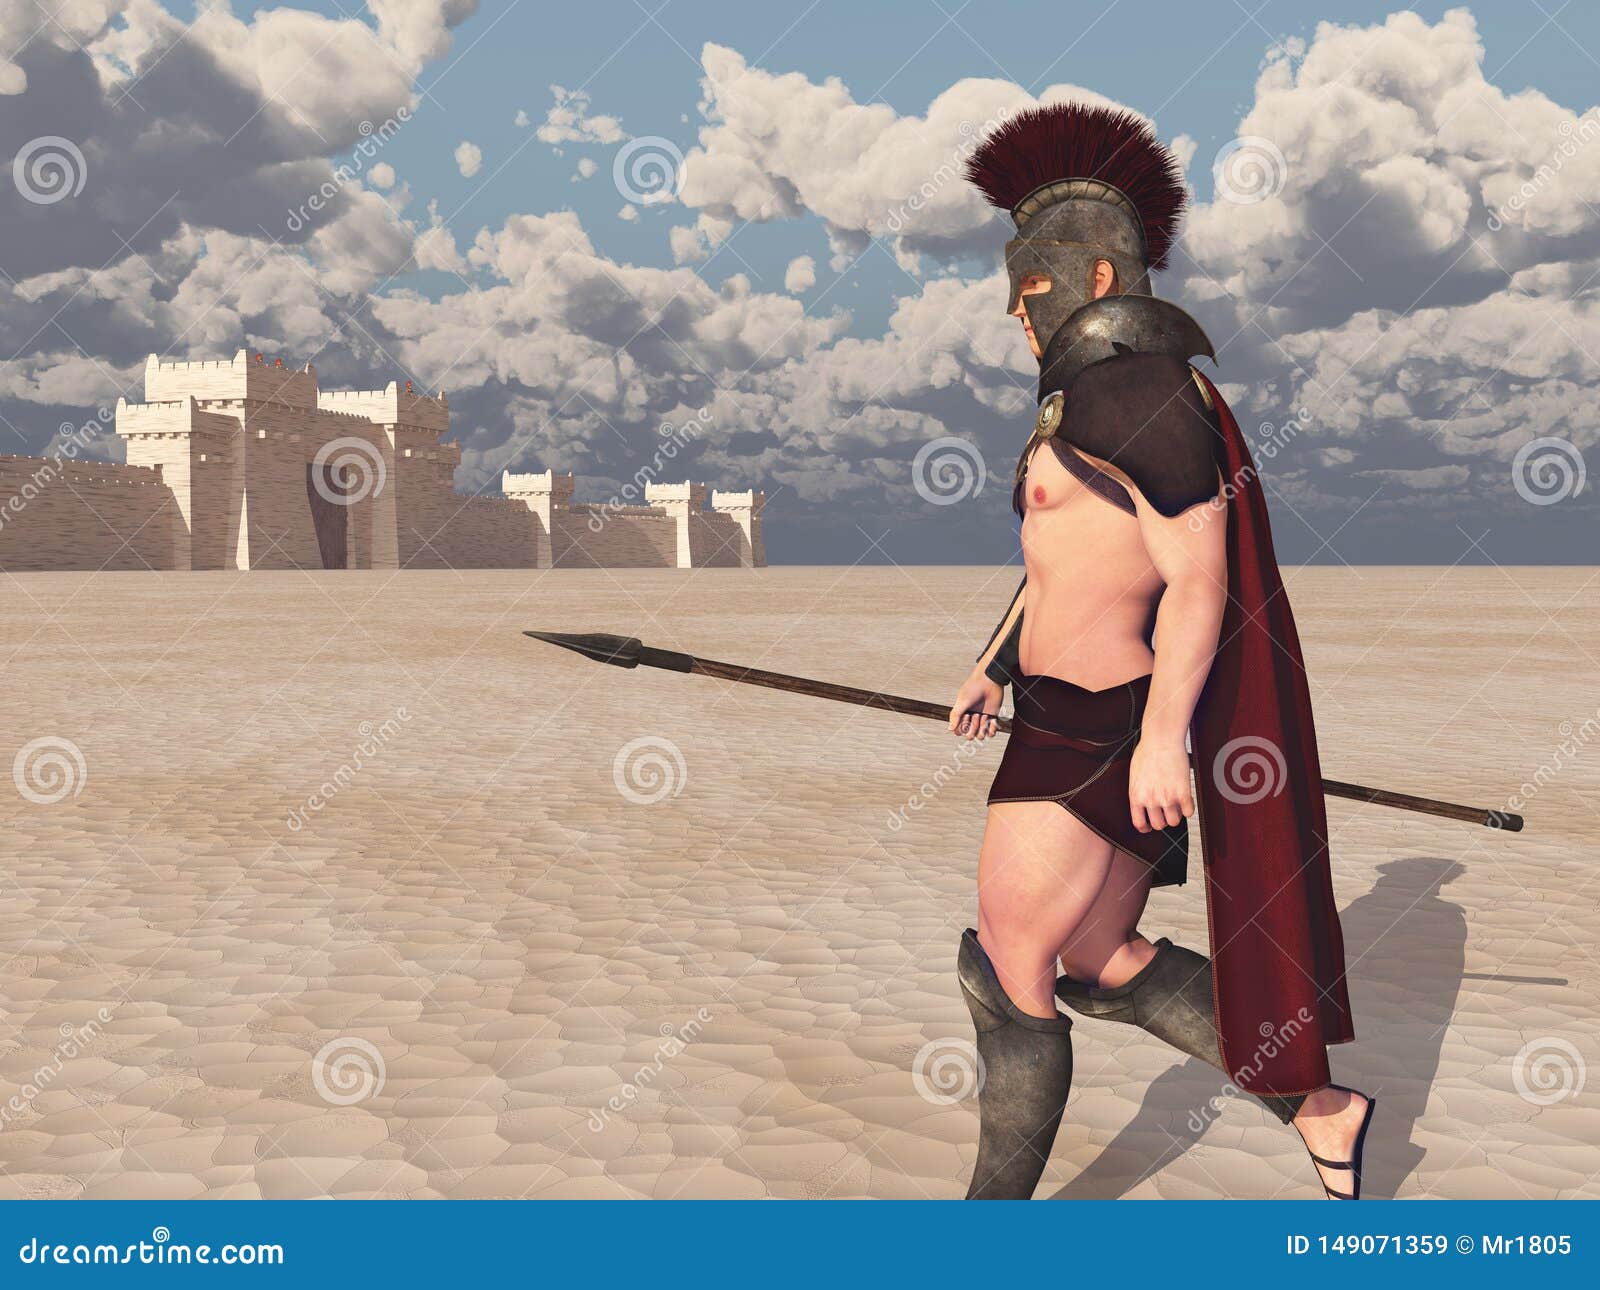 Achilles, Greek Hero of the Trojan War, Goes To Battle Against